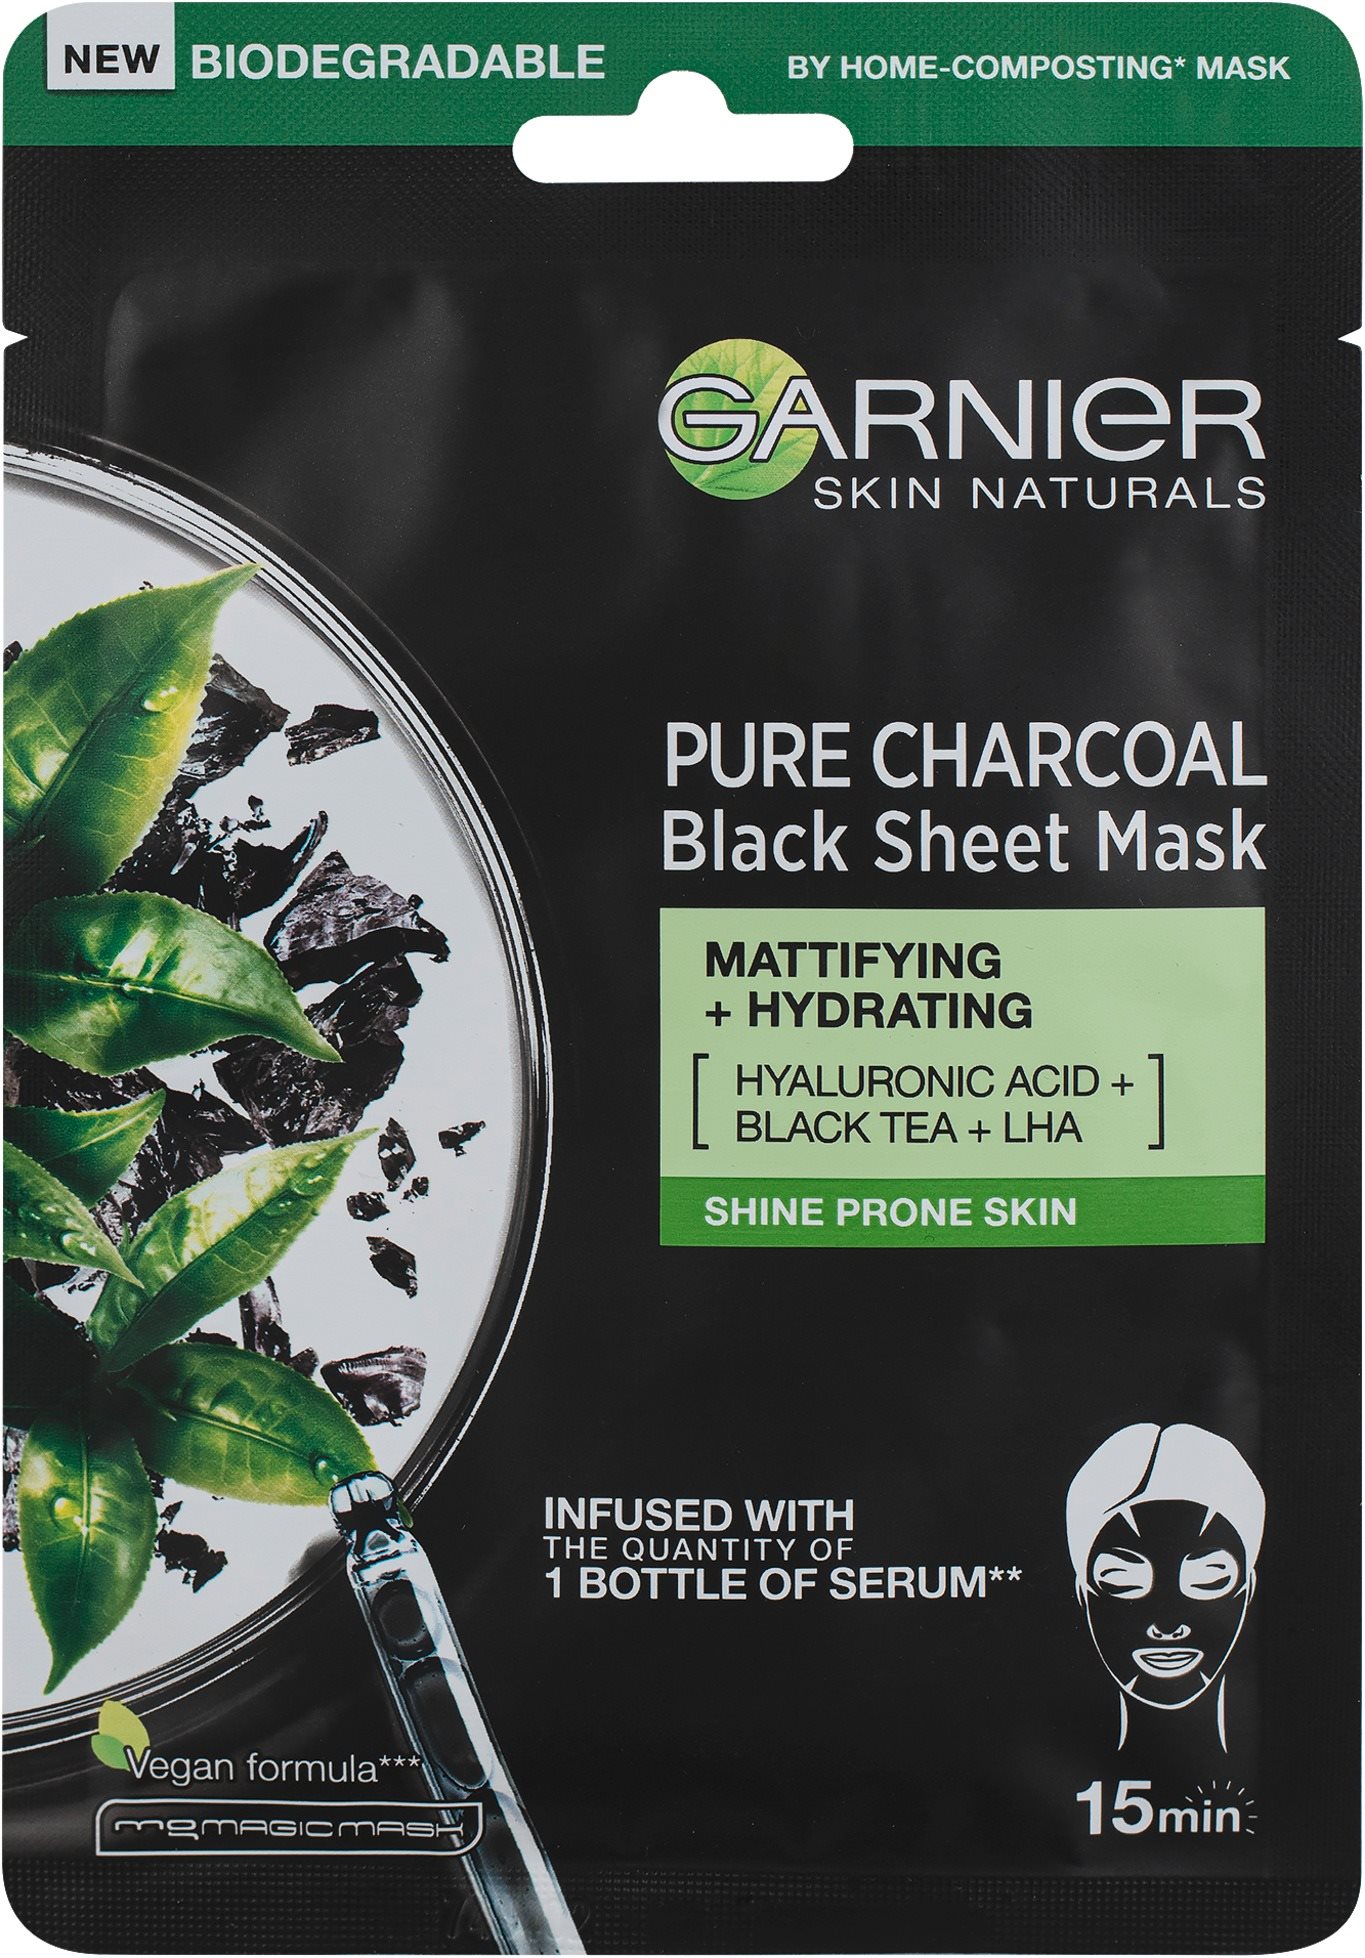 Garnet Skin Naturals Tiszta Faszén Fekete Tissue Maszk fekete tea kivonattal 28 g